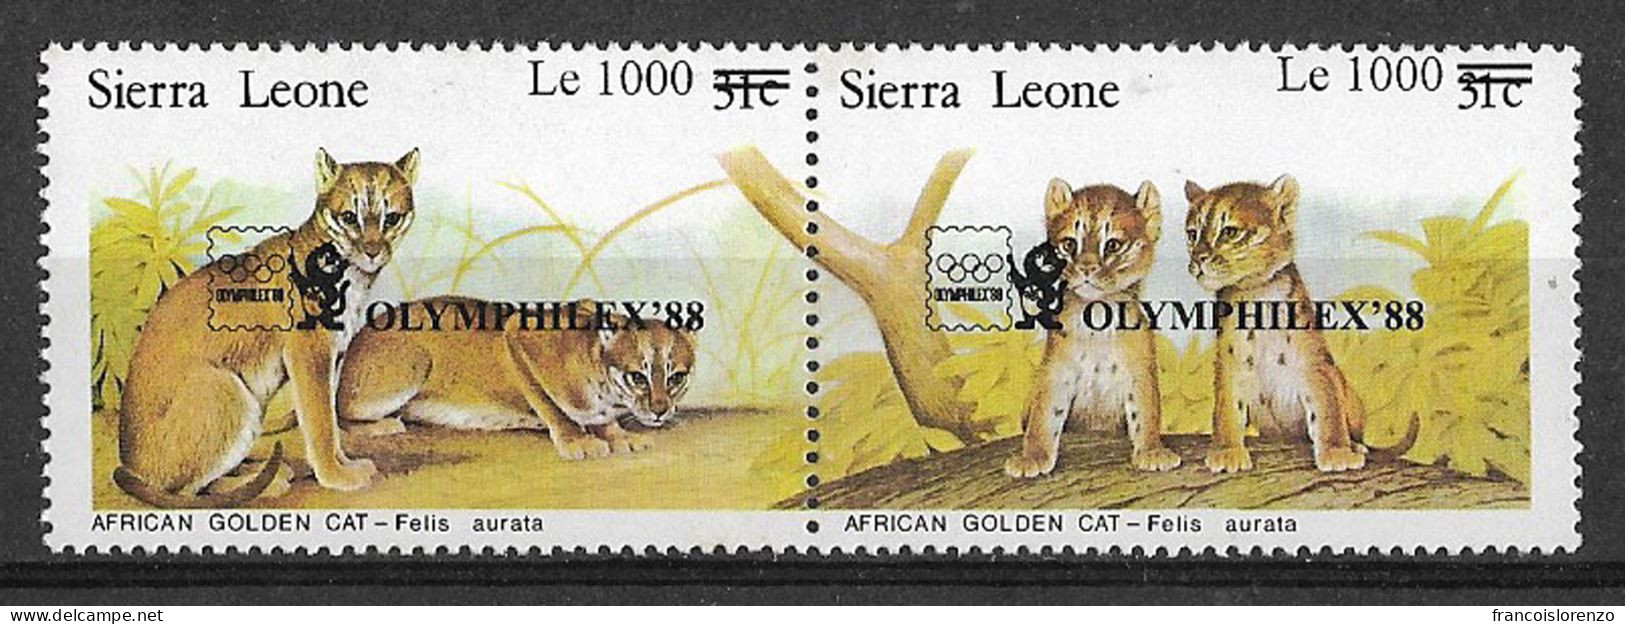 Sierra Leone 1988 Wild Animals Cats Of Prey Philately South Korea Stamp Exhibition Olymphilex Rare Set MNH - Big Cats (cats Of Prey)